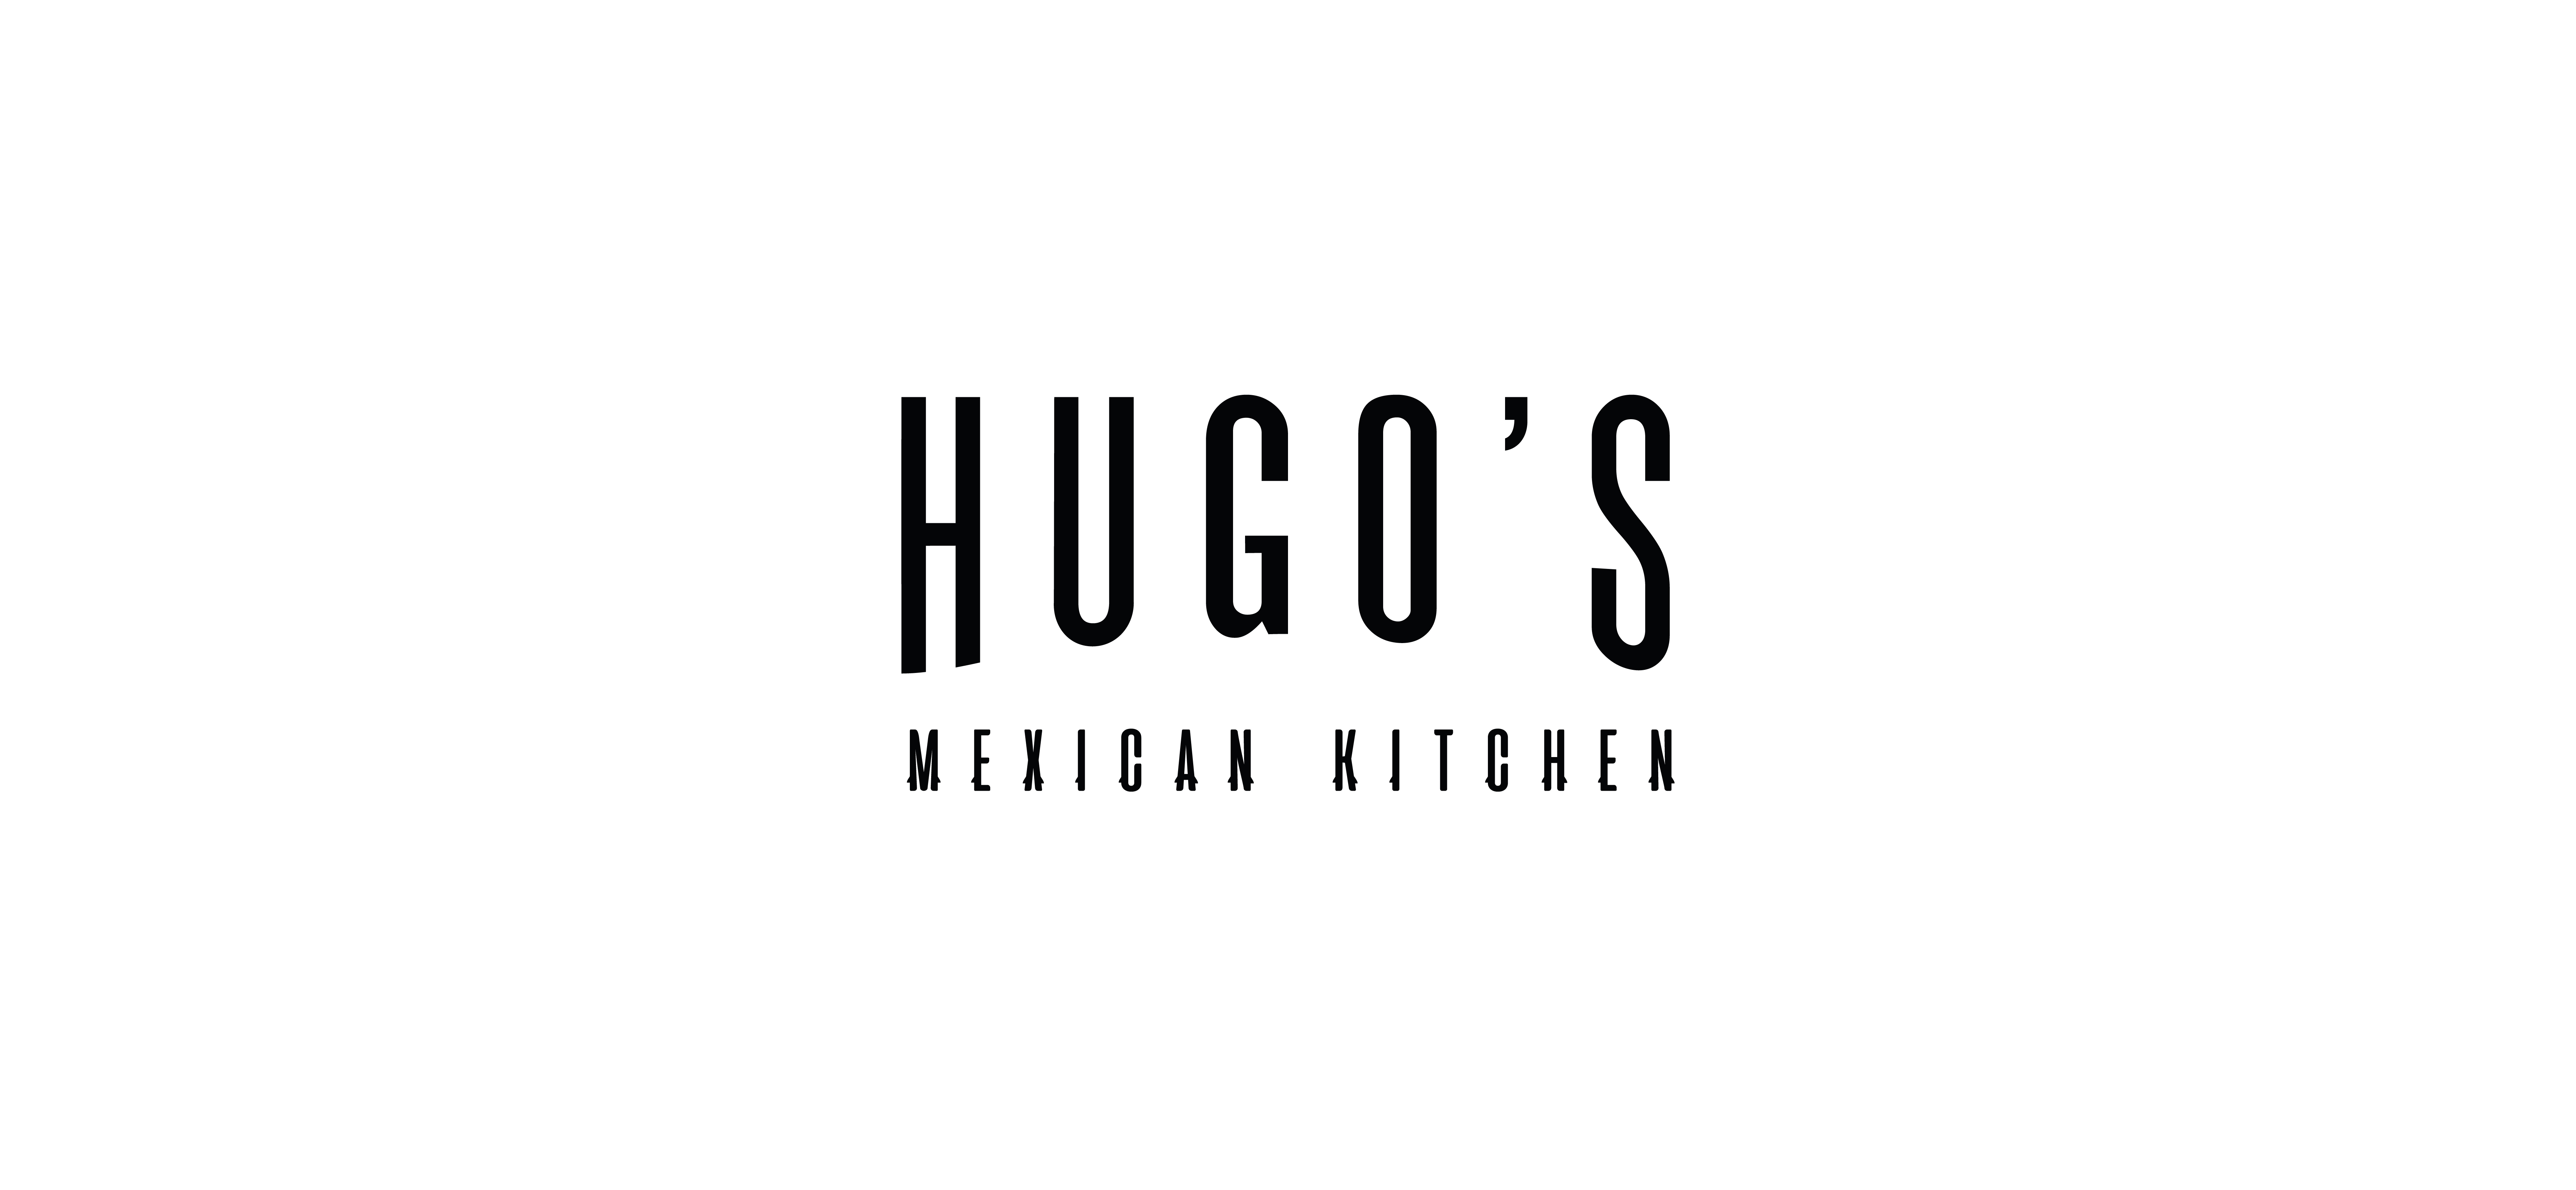 Hugos Mexican Kitchen logo in black narrow text